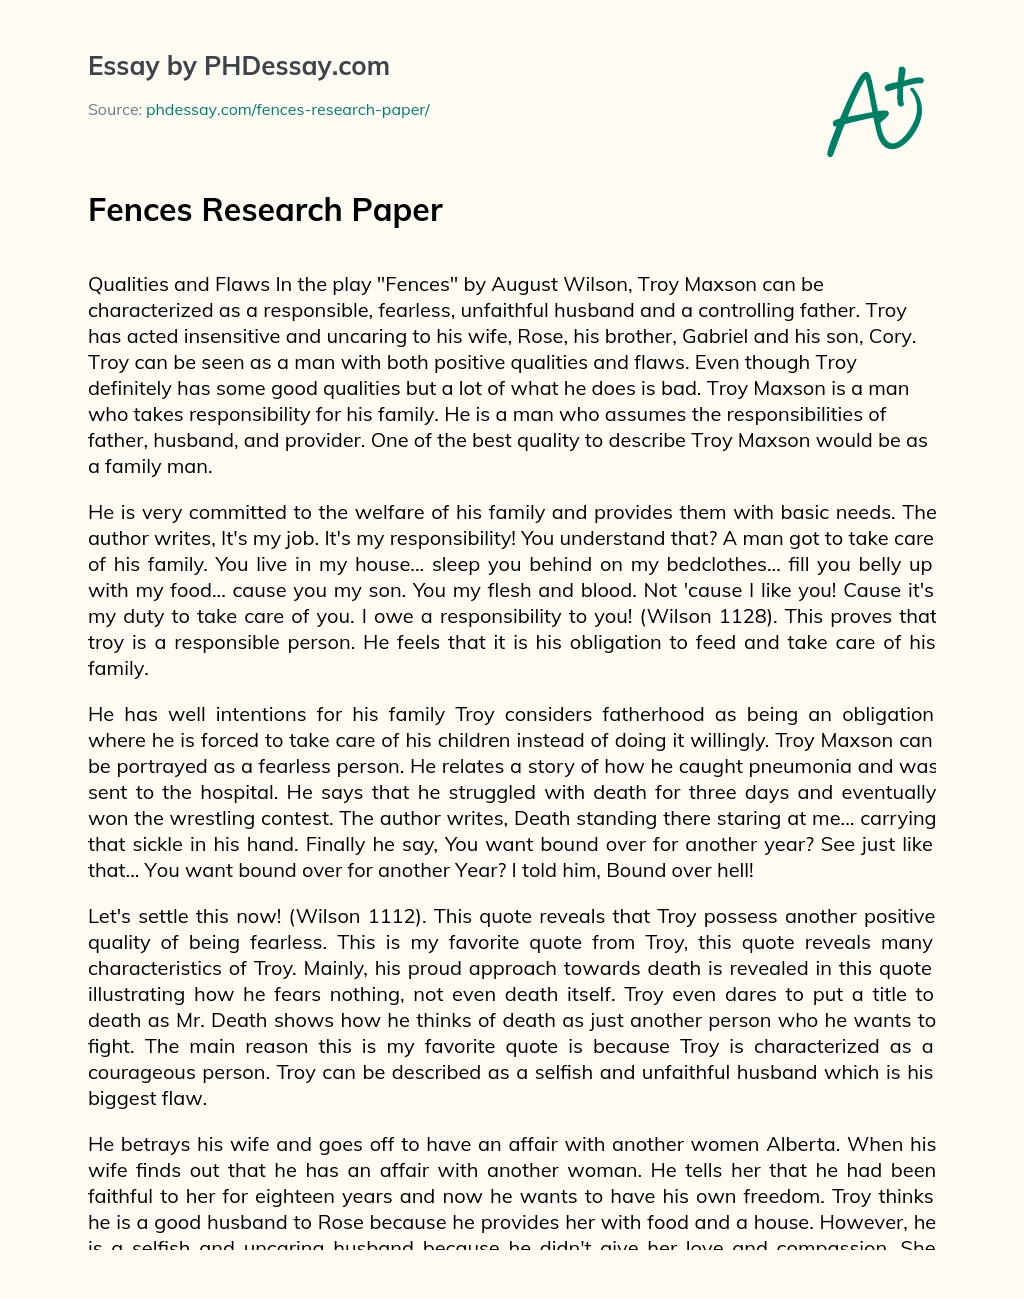 Fences Research Paper essay